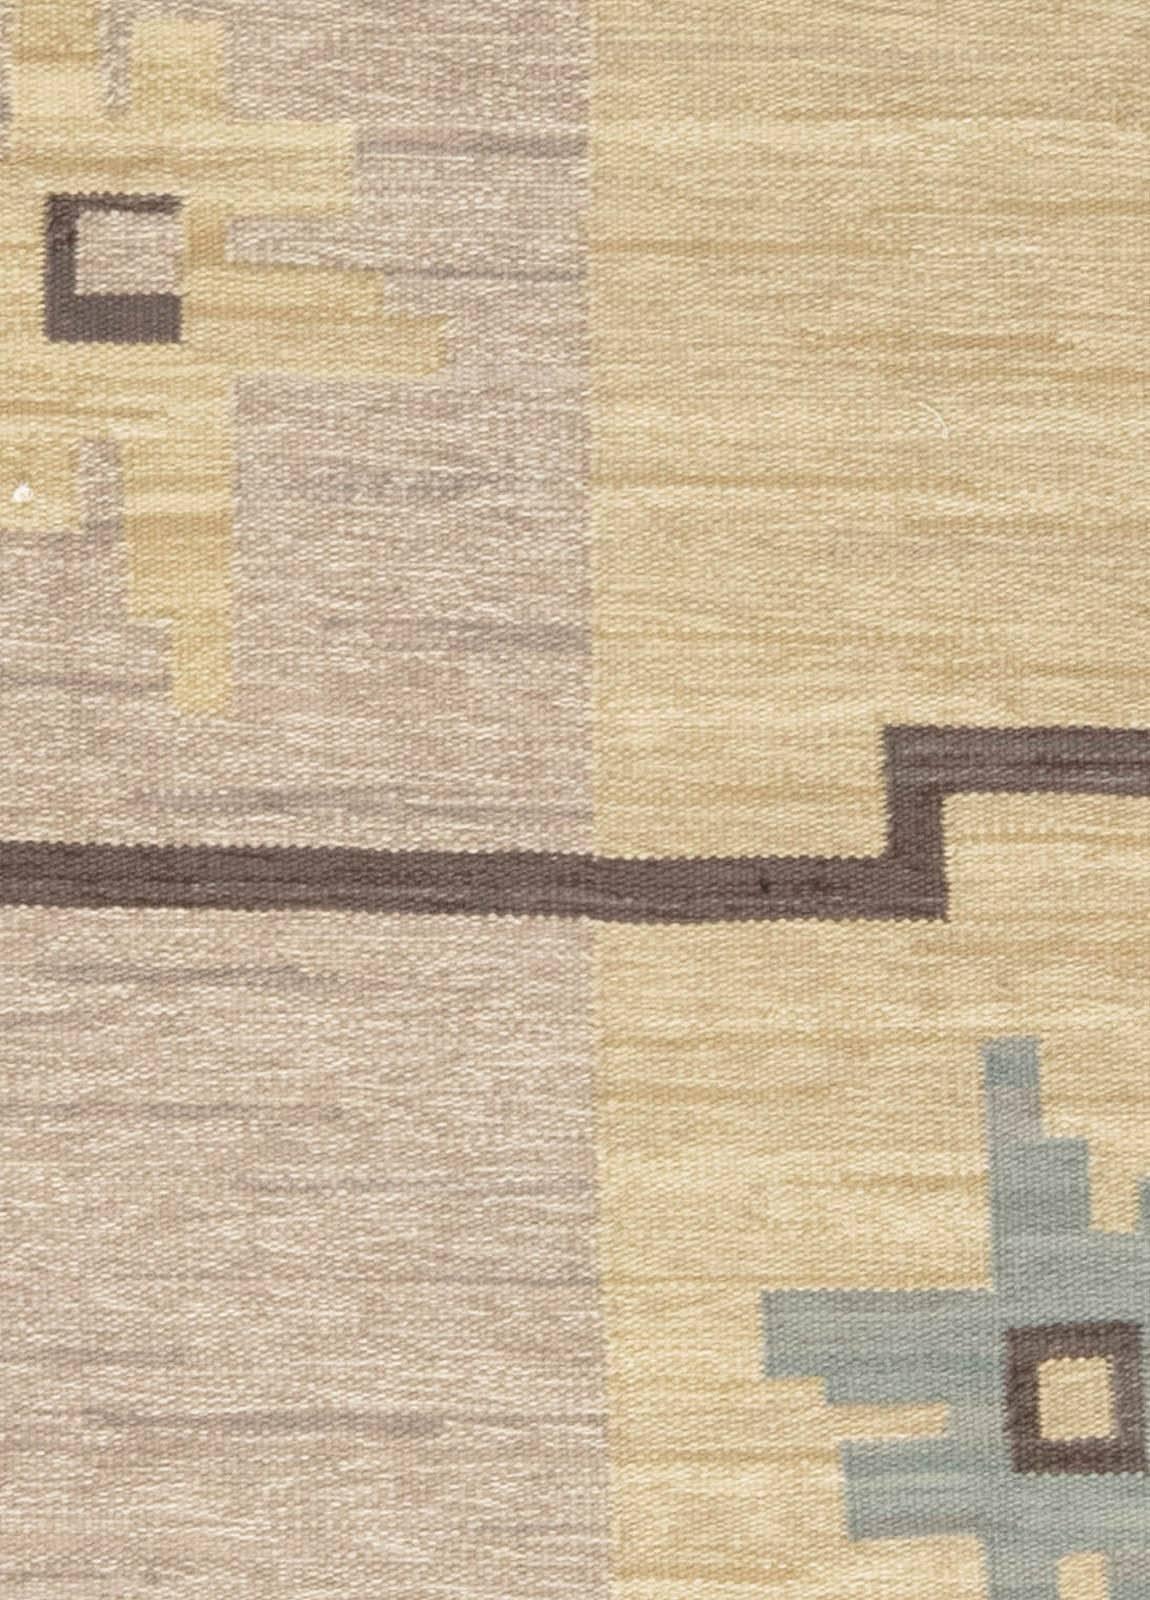 Vintage Swedish flat-weave rug by Sodra Kalmar
Size: 8'1